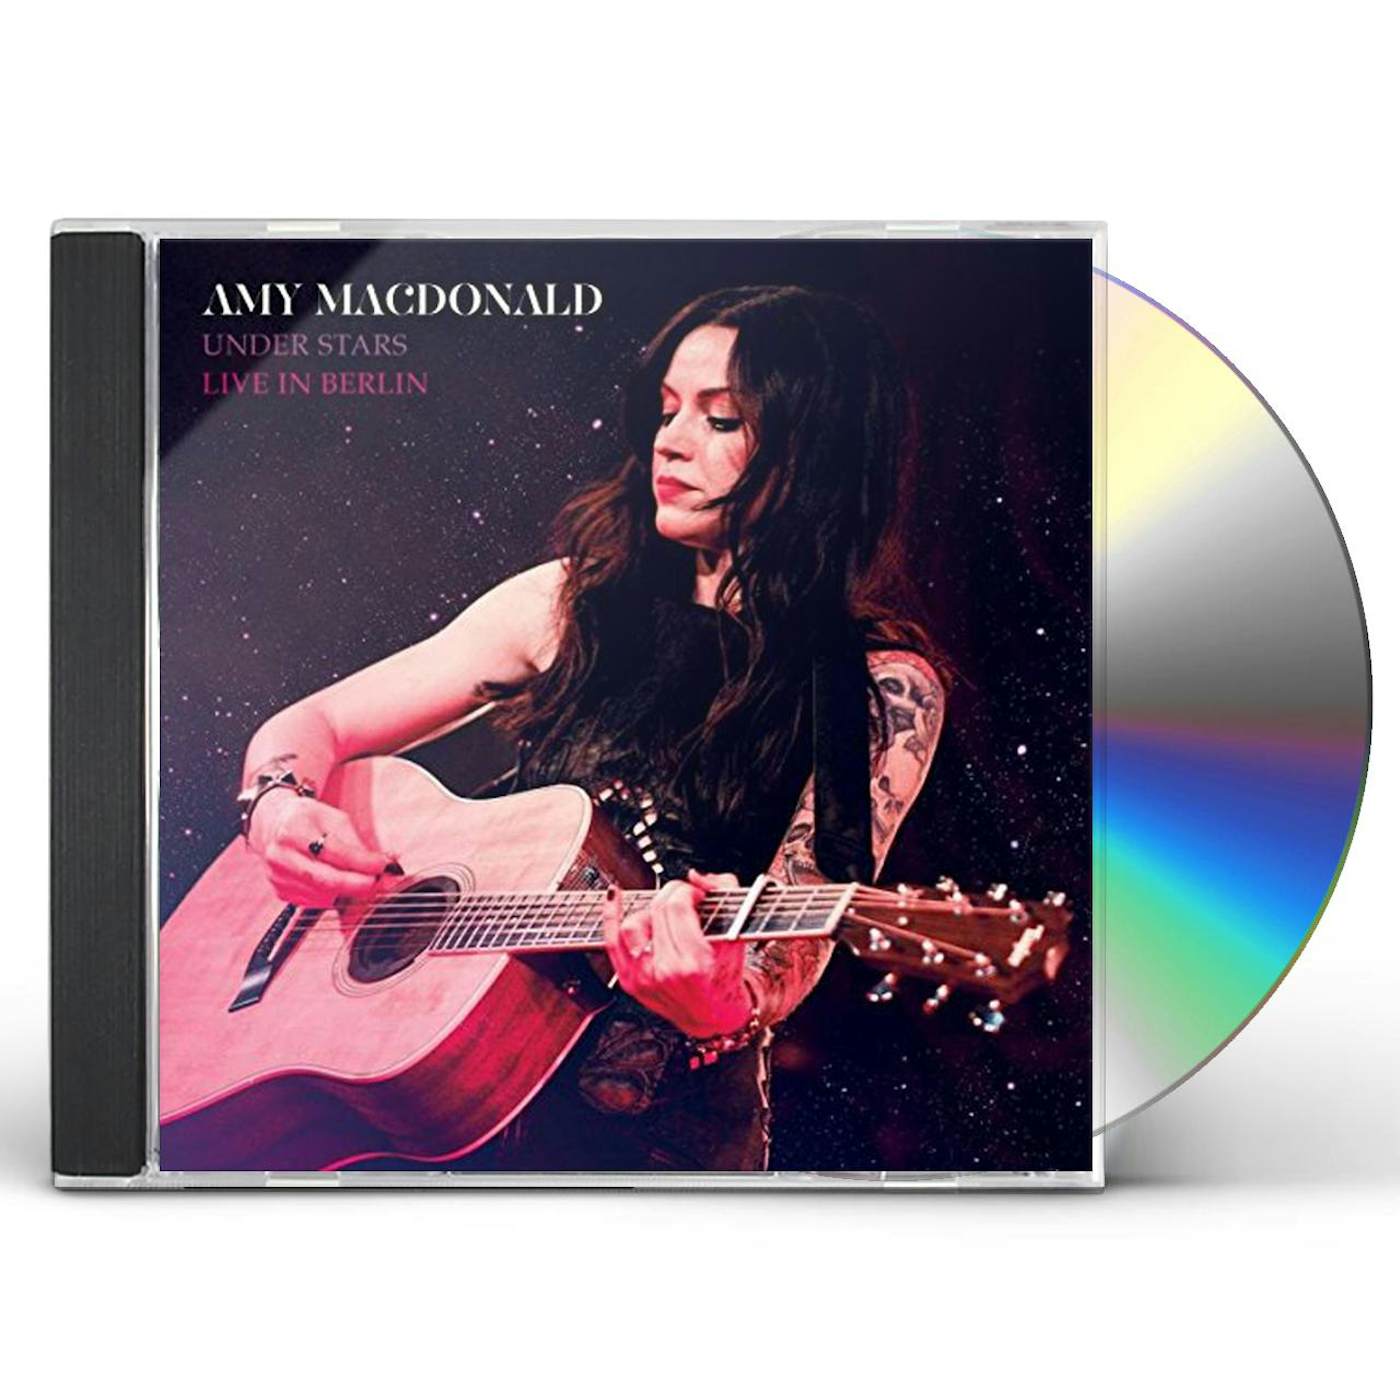 Amy Macdonald UNDER STARS (LIVE IN BERLIN) CD